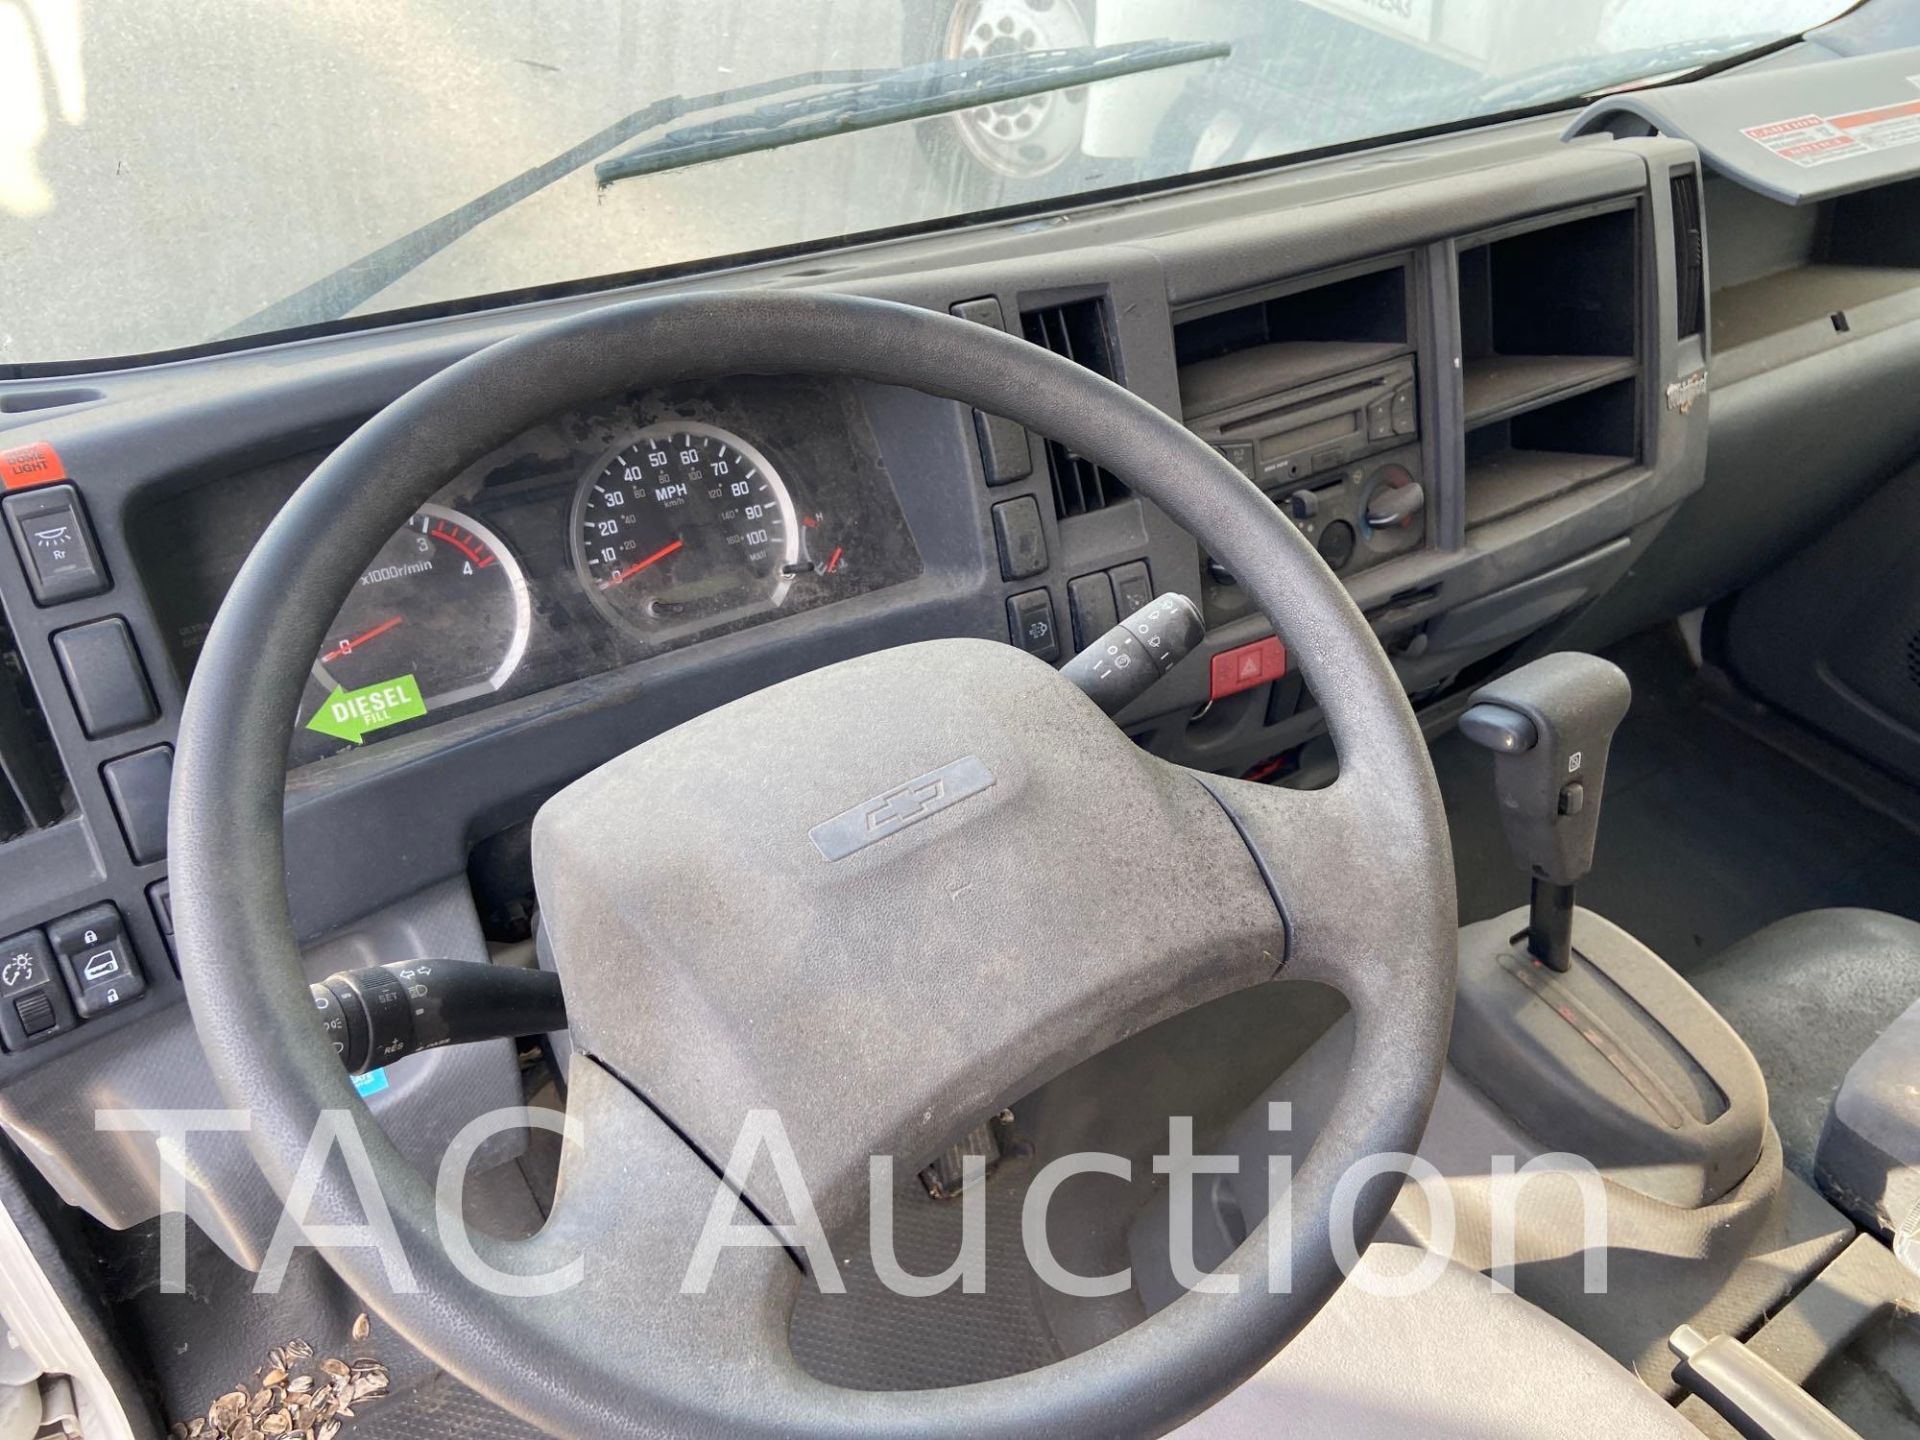 2017 Chevrolet 4500HD Diesel 16ft Box Truck - Image 9 of 80